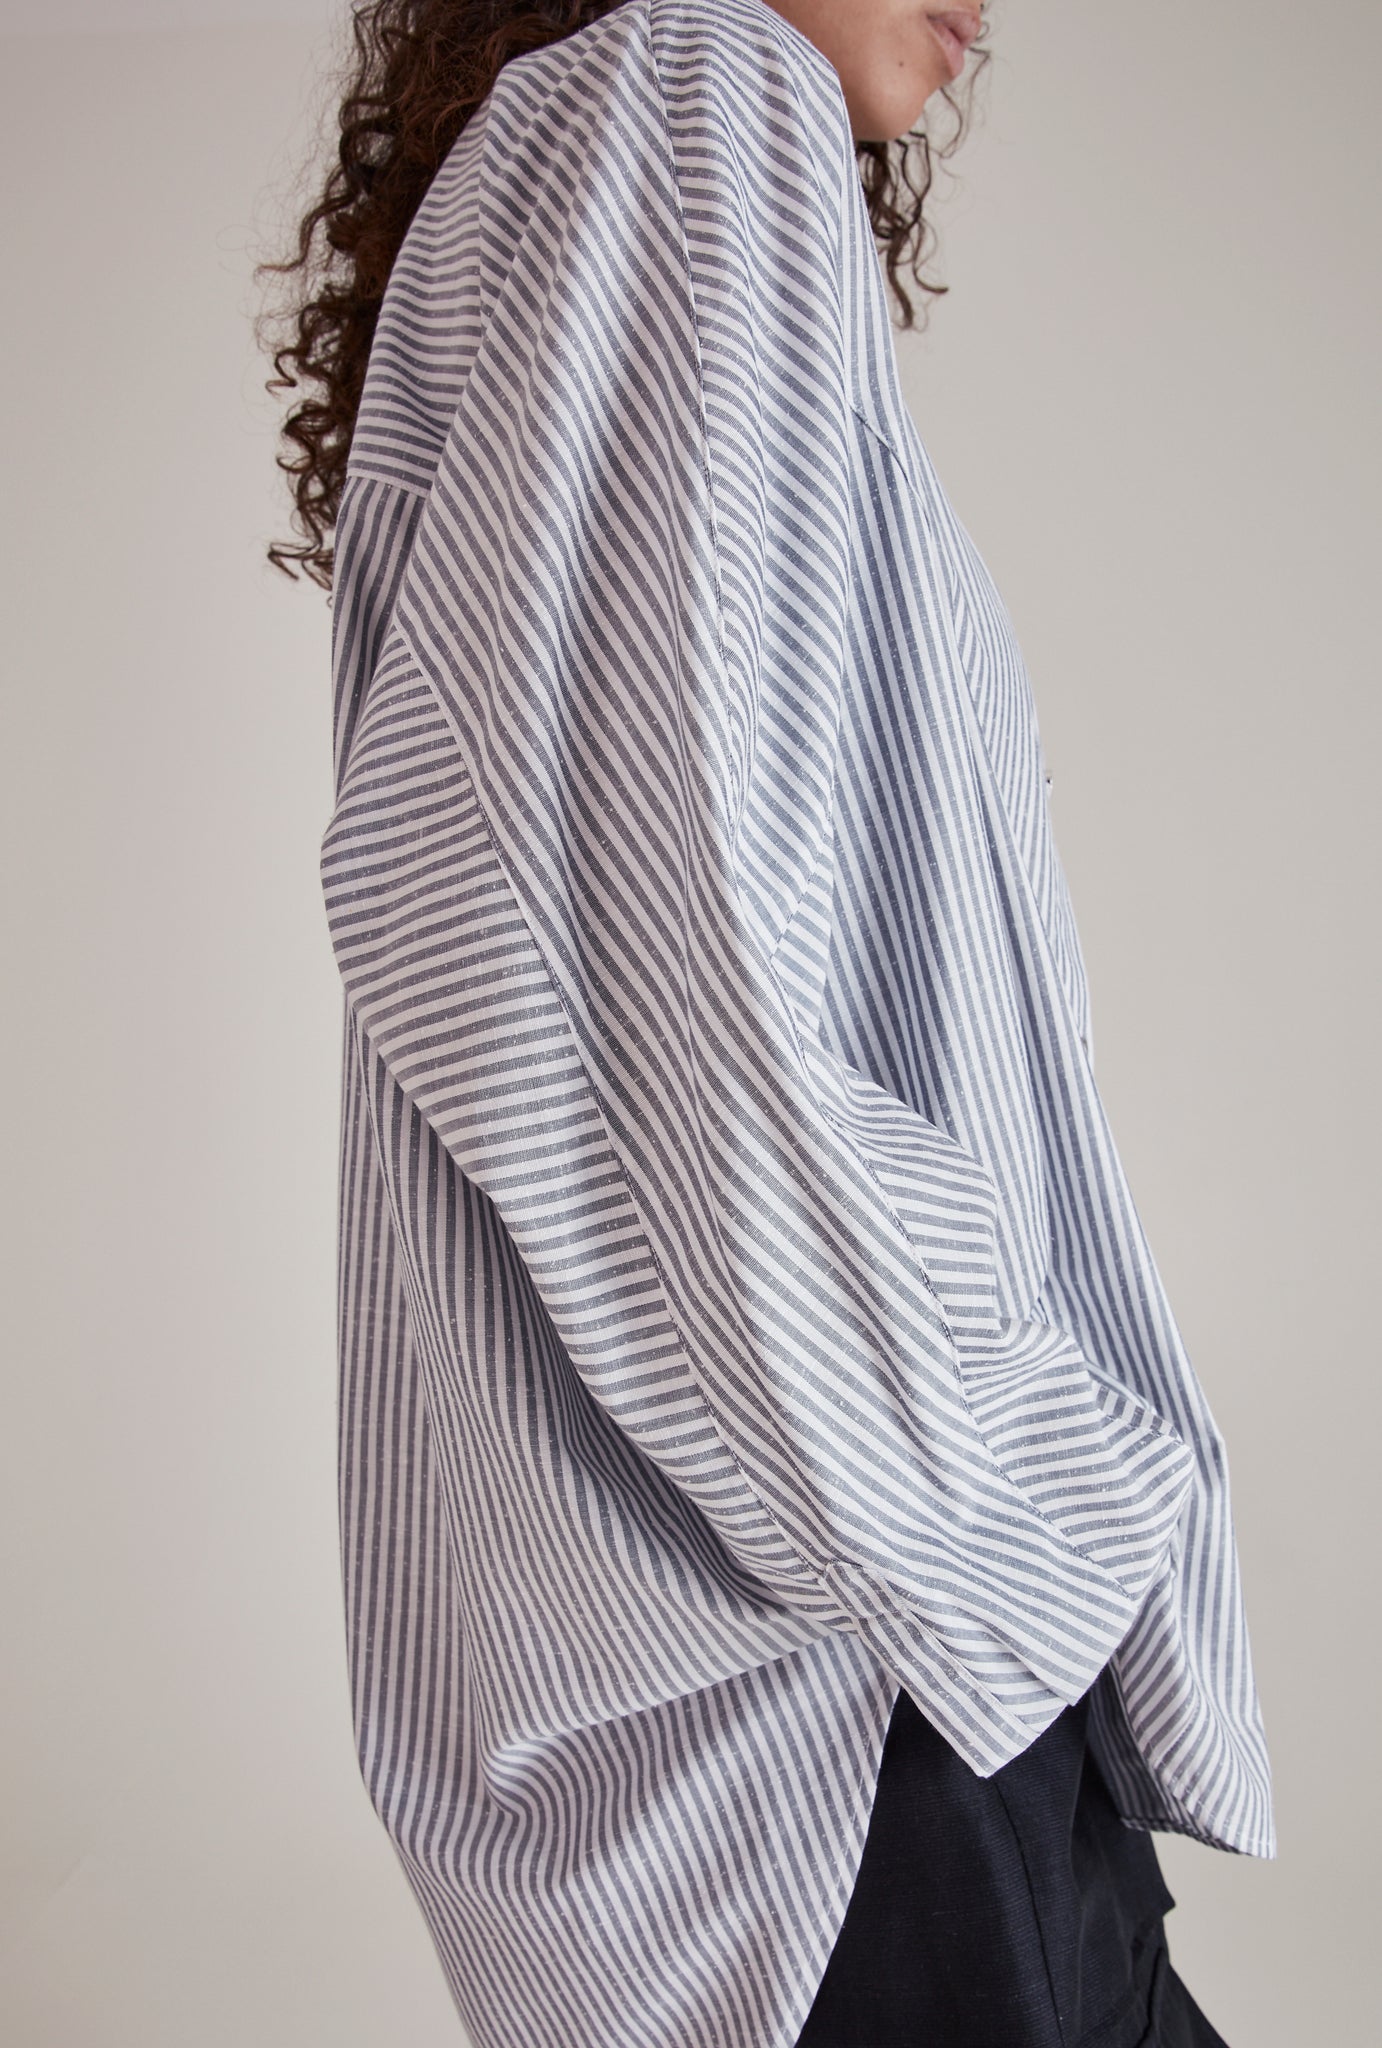 Block shirt by Hope - grey nepped stripe